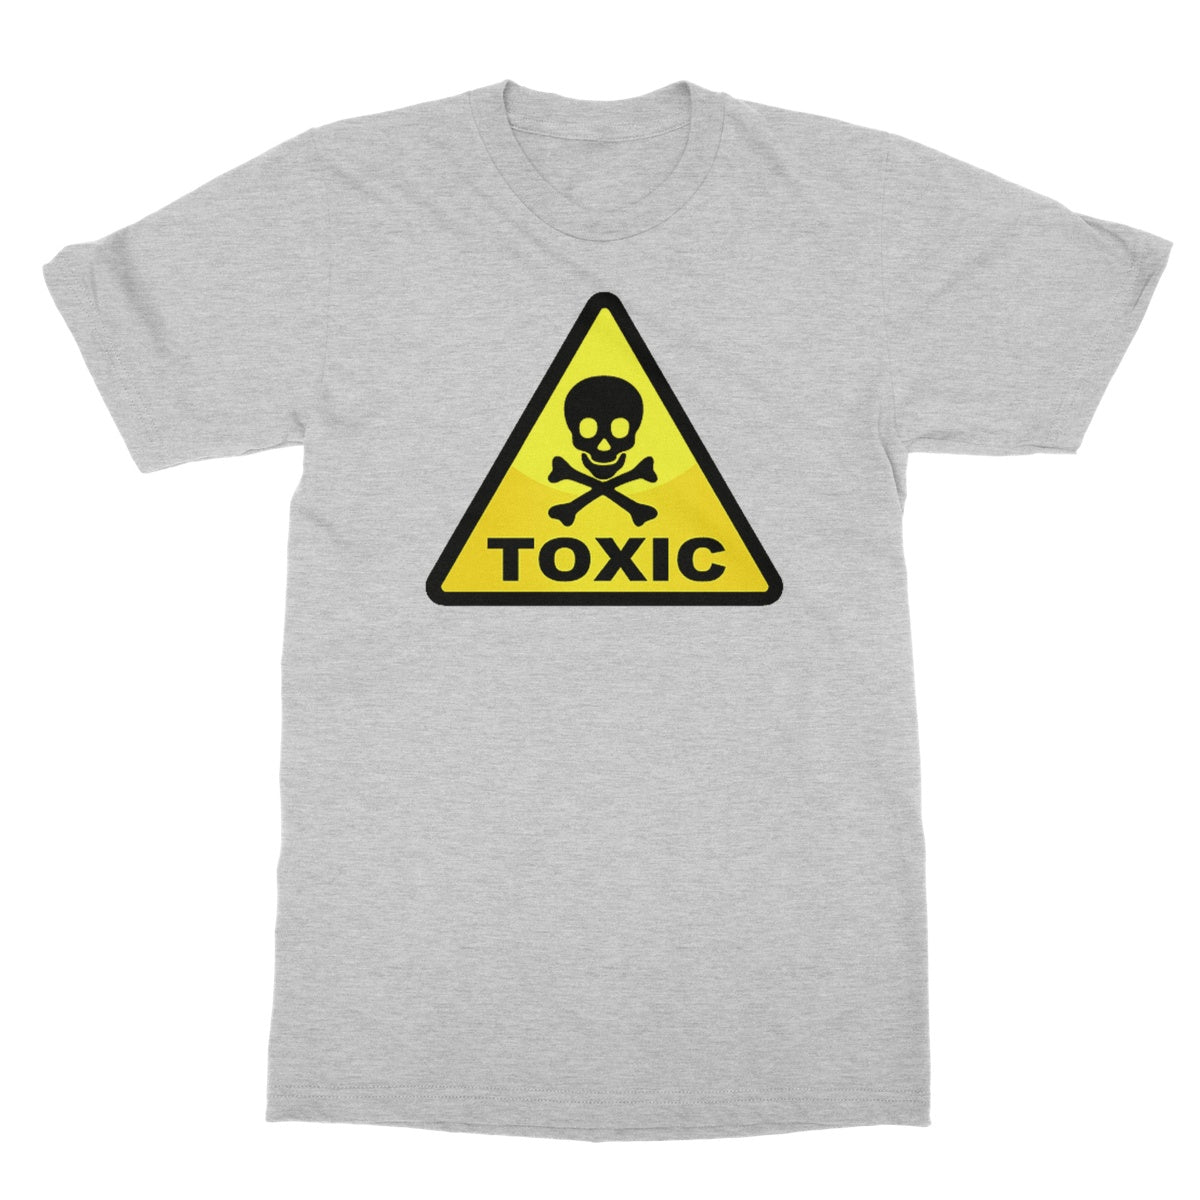 toxic t shirt grey